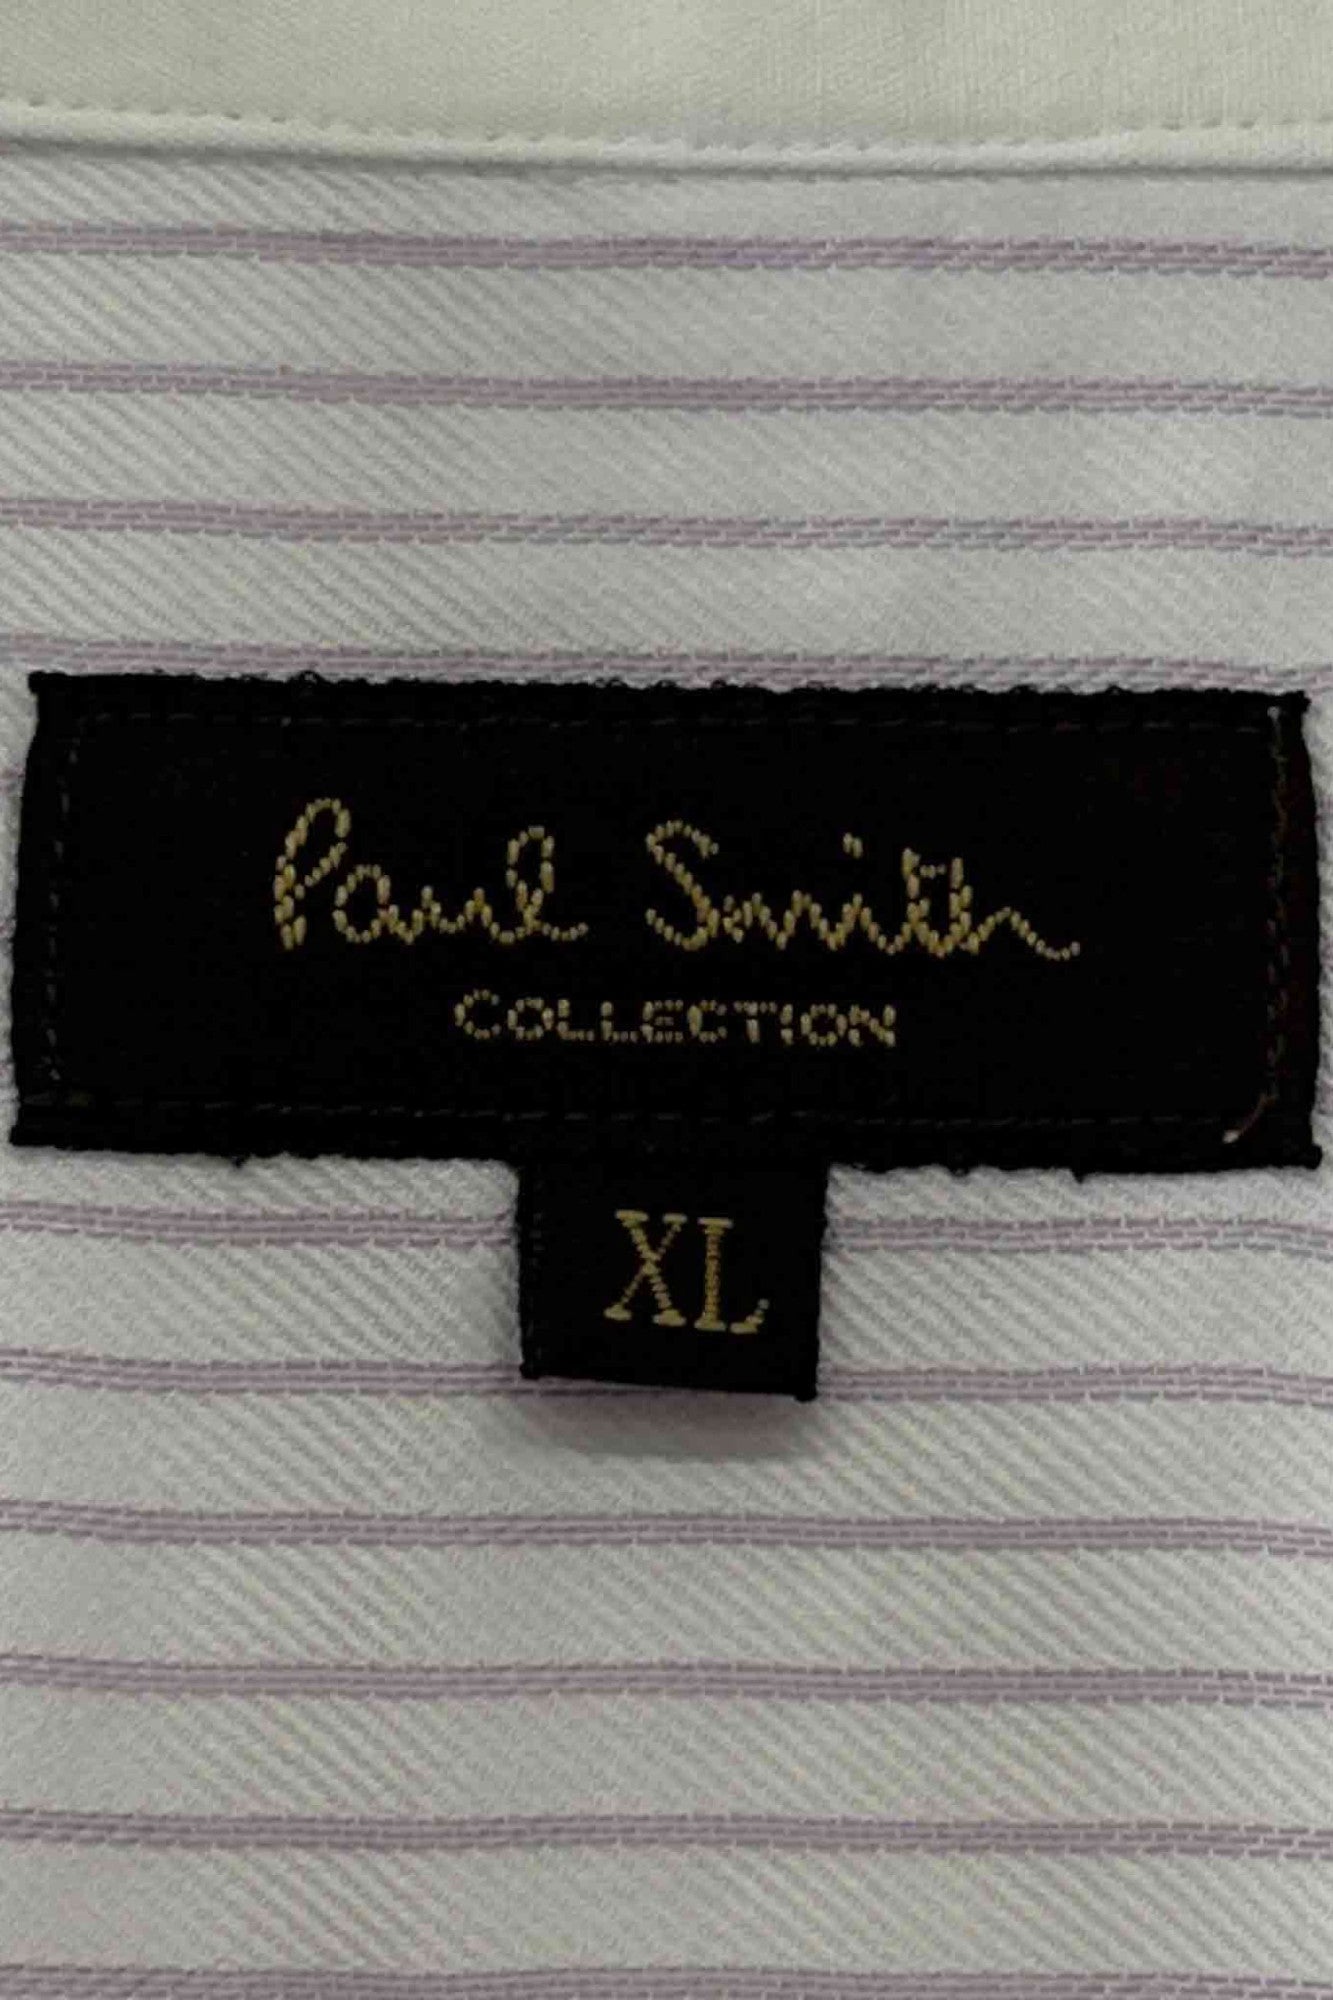 Paul Smith purple striped shirt